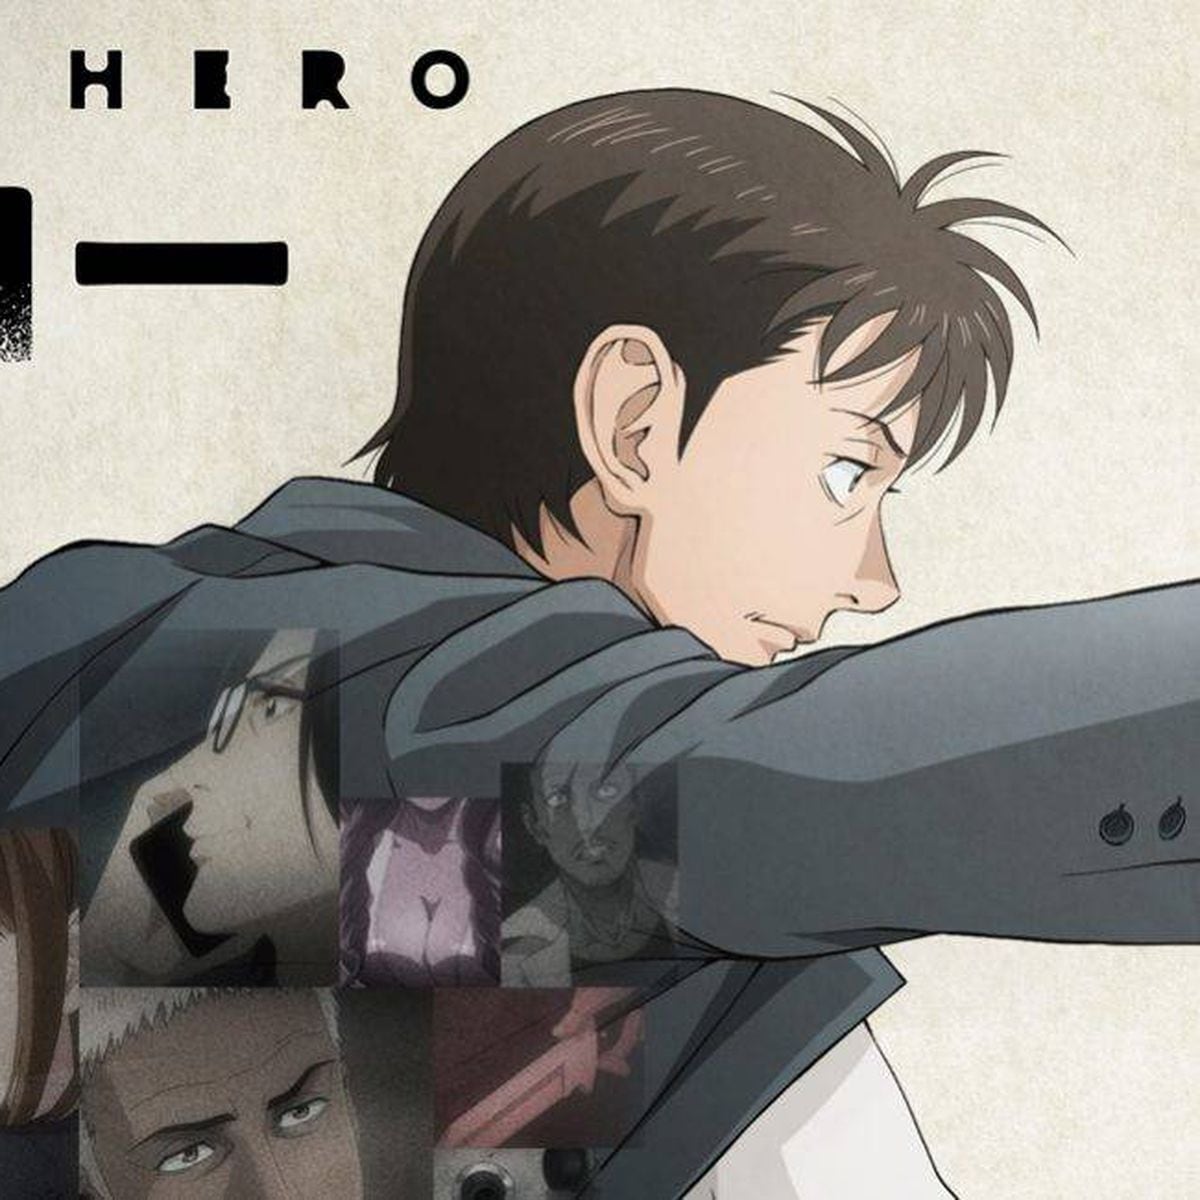 Death Note: One-Shot oficial continuará historia del manga y anime